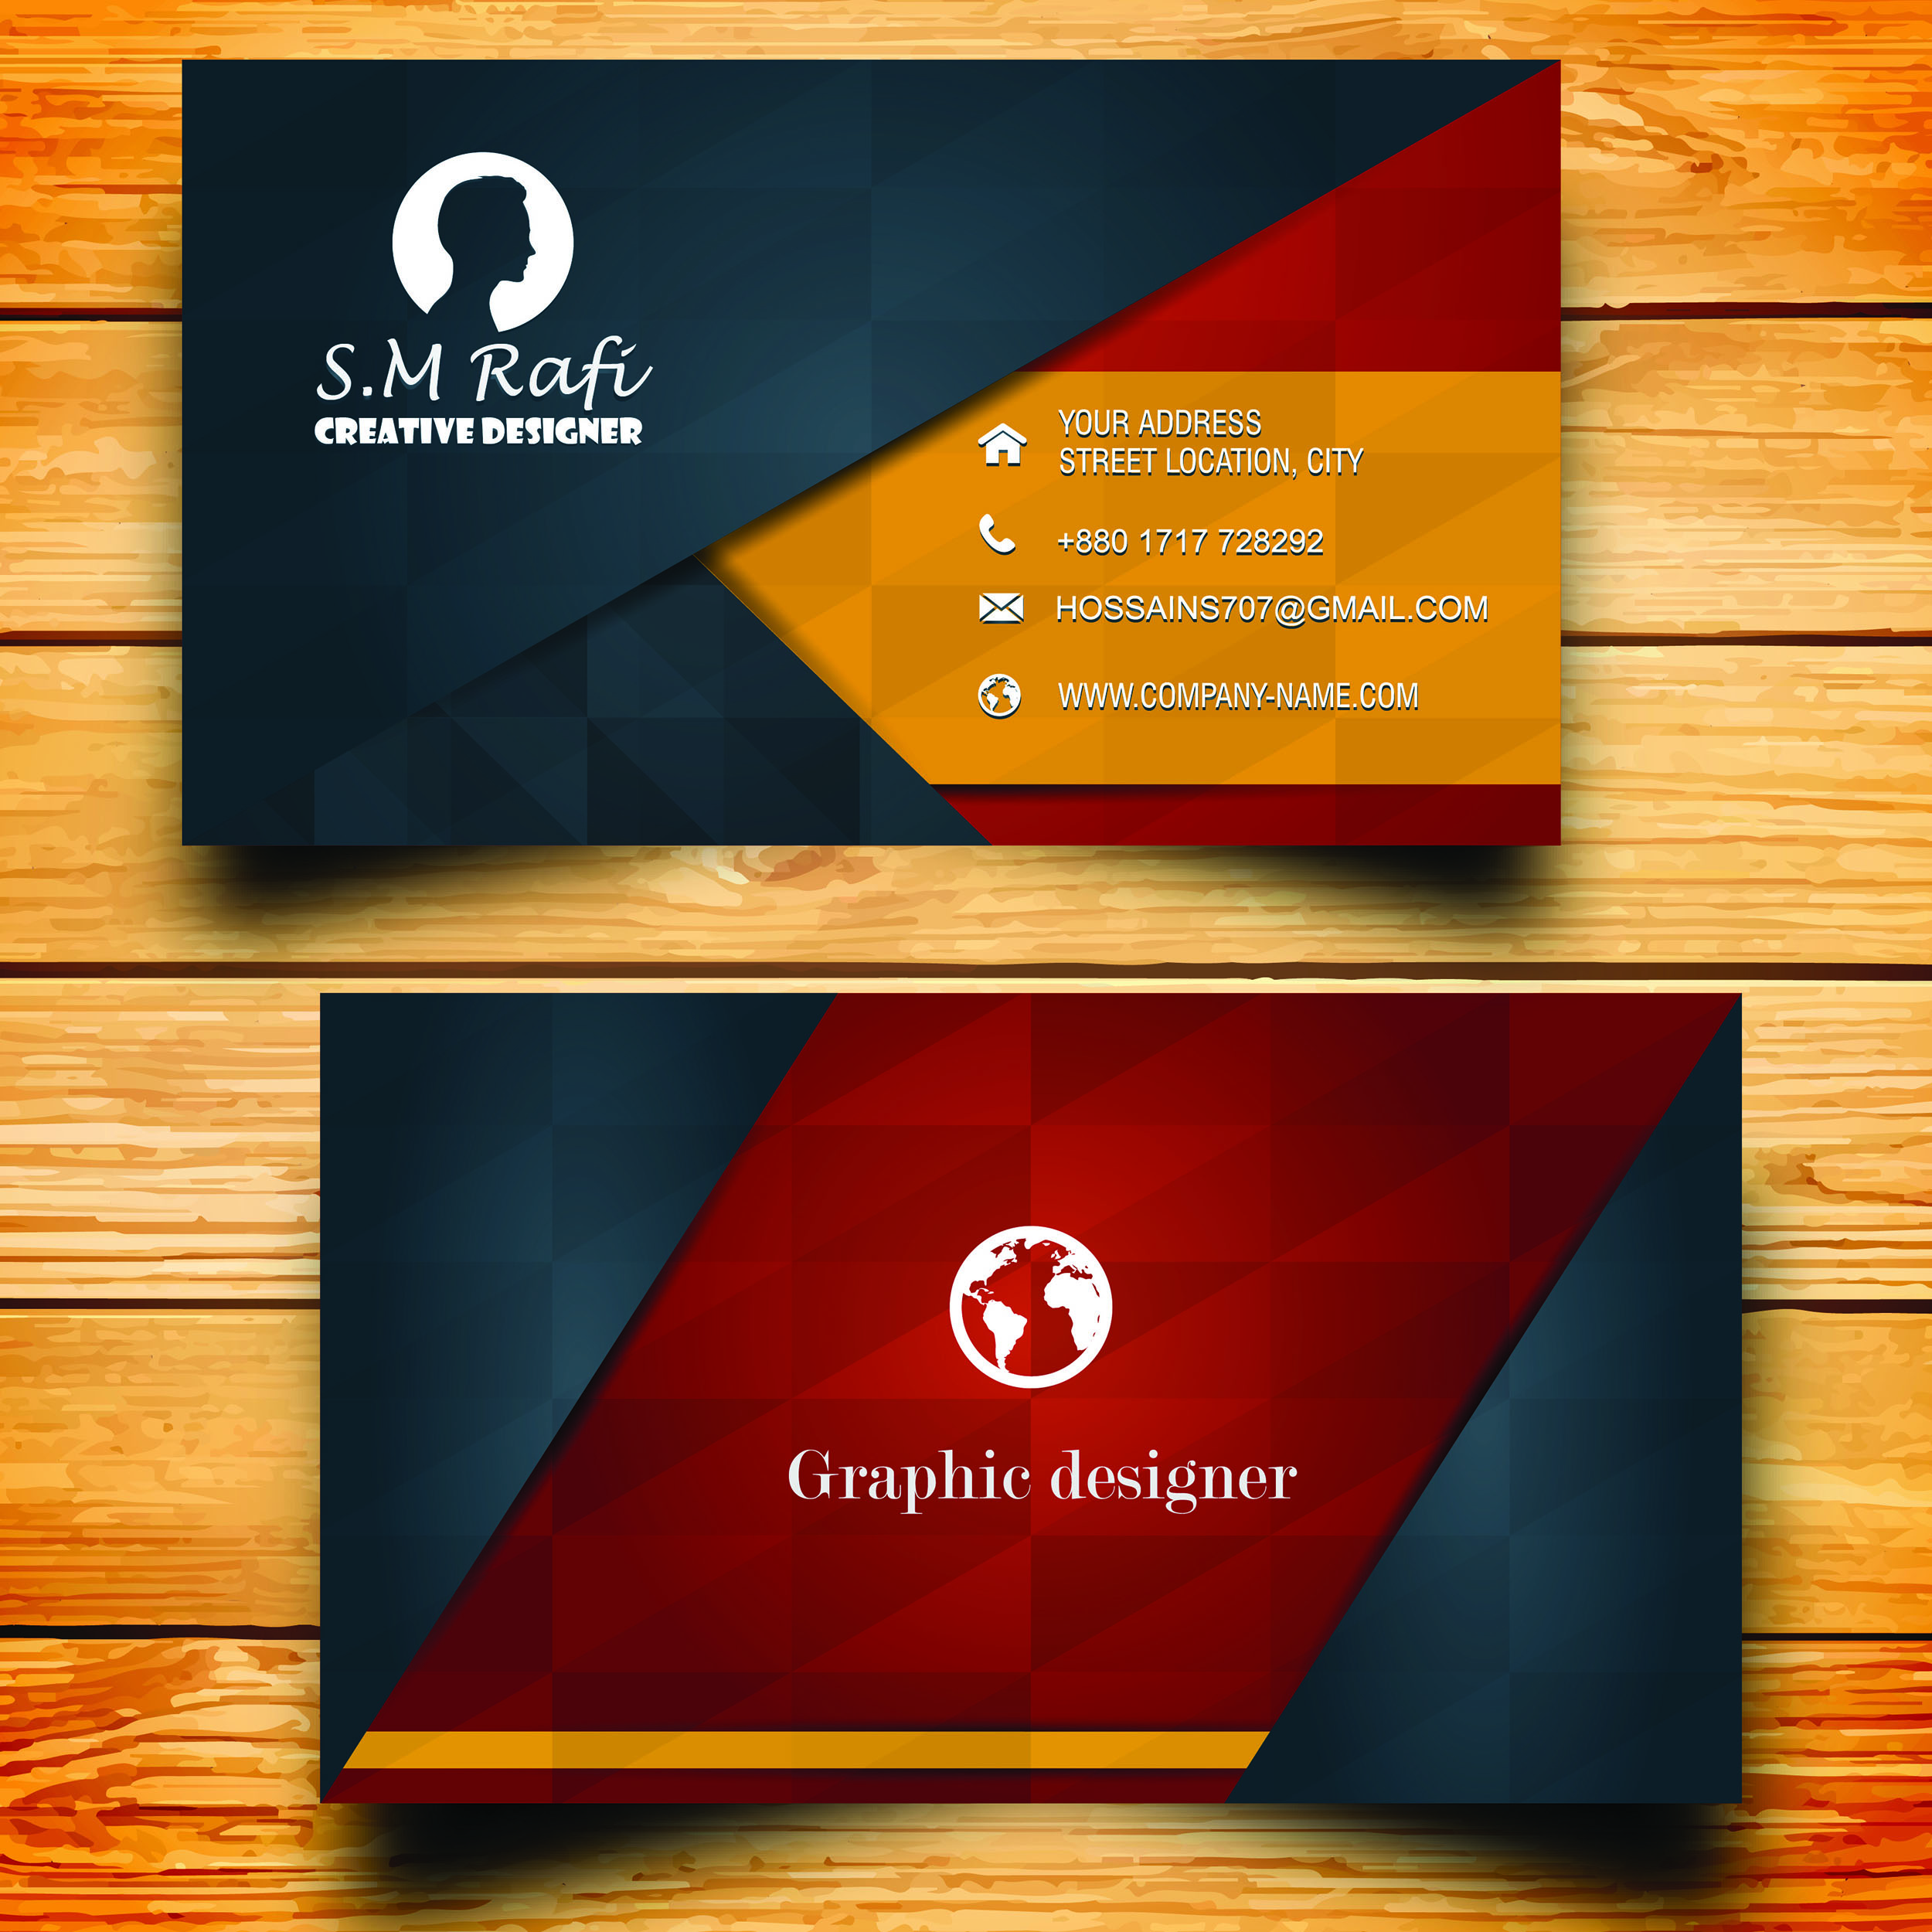 designing business cards